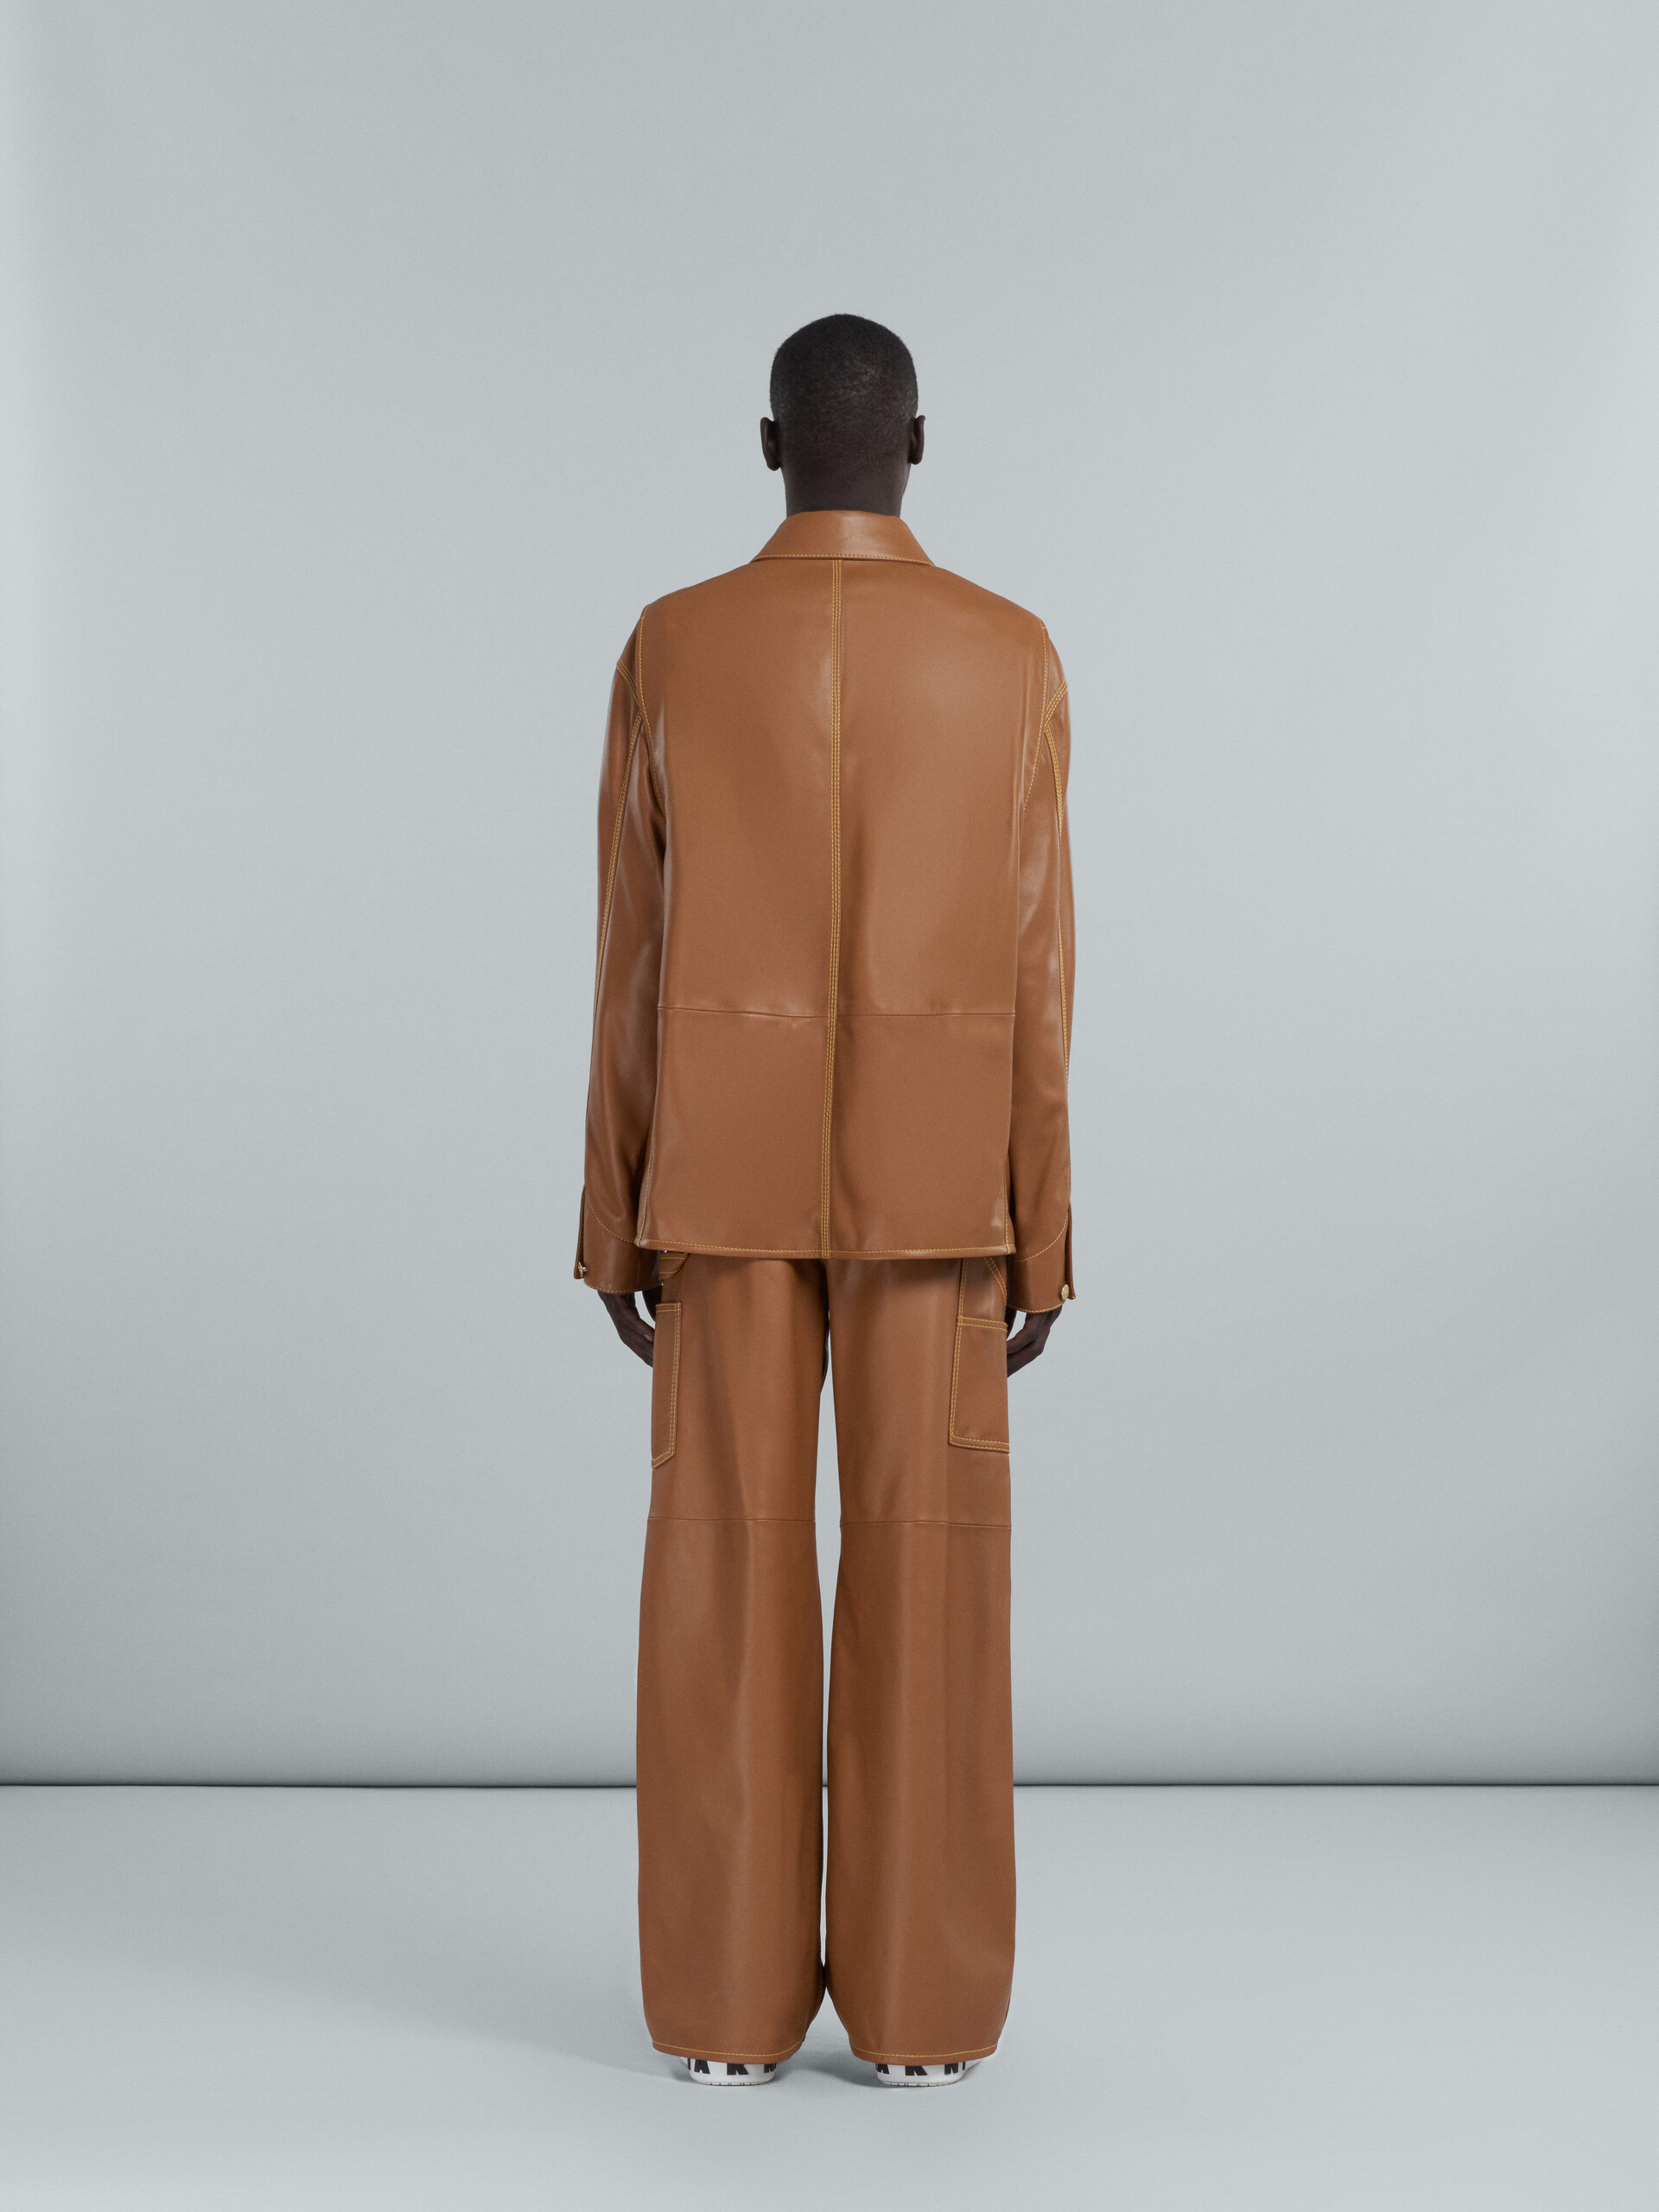 MARNI x CARHARTT WIP - brown leather jacket - Jackets - Image 3